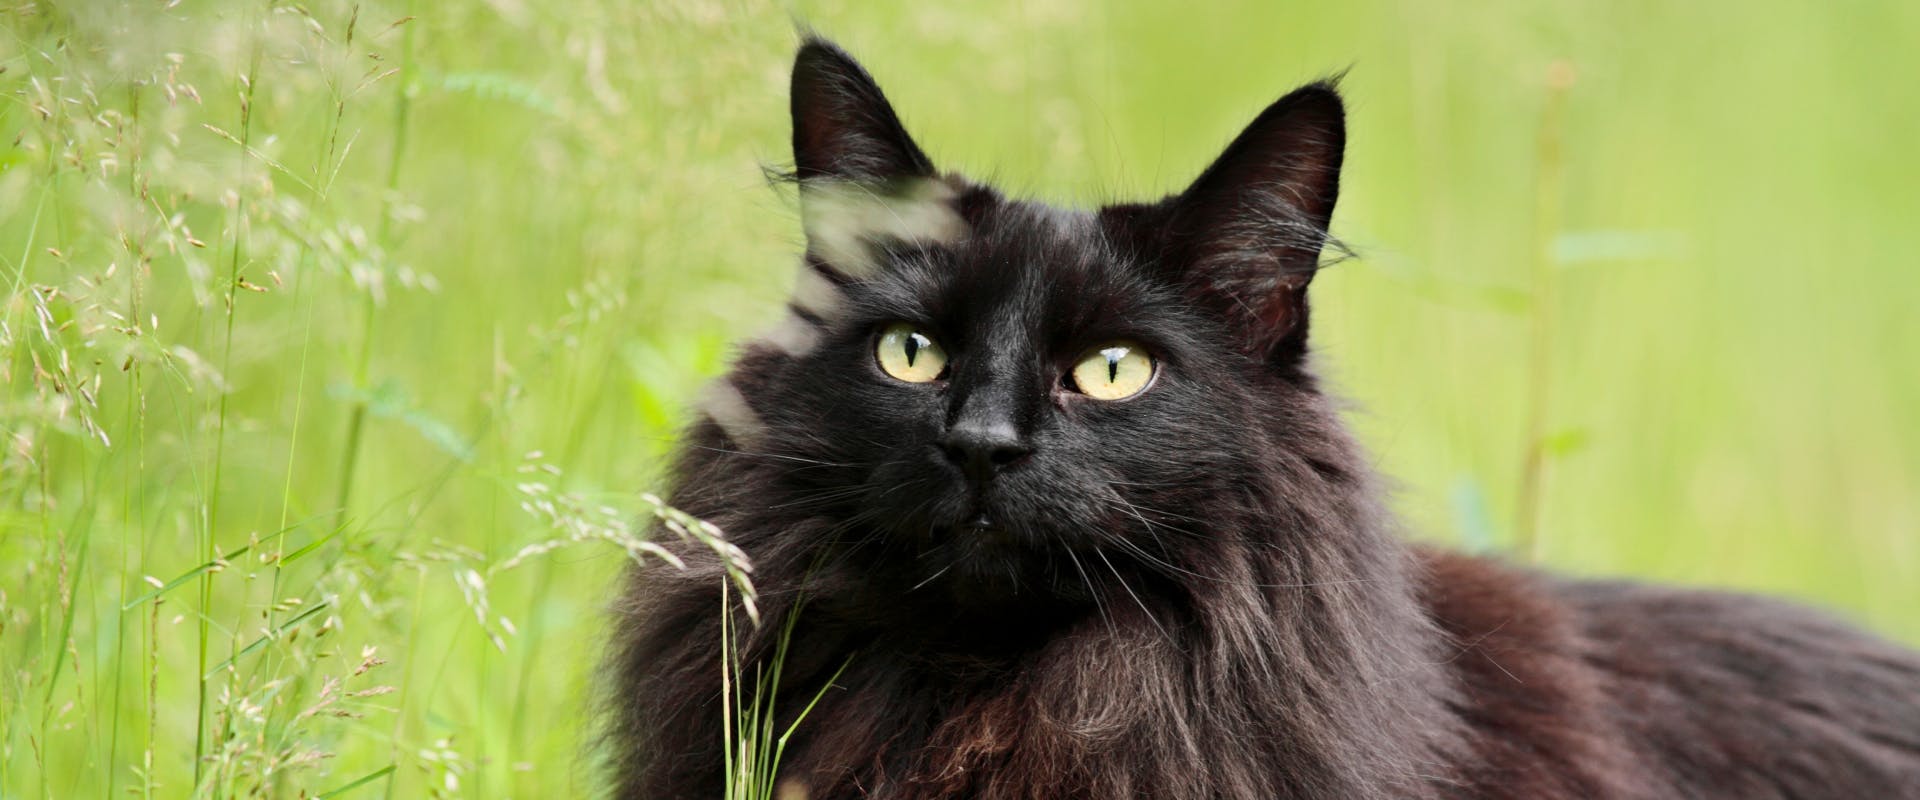 A black cat in a garden.